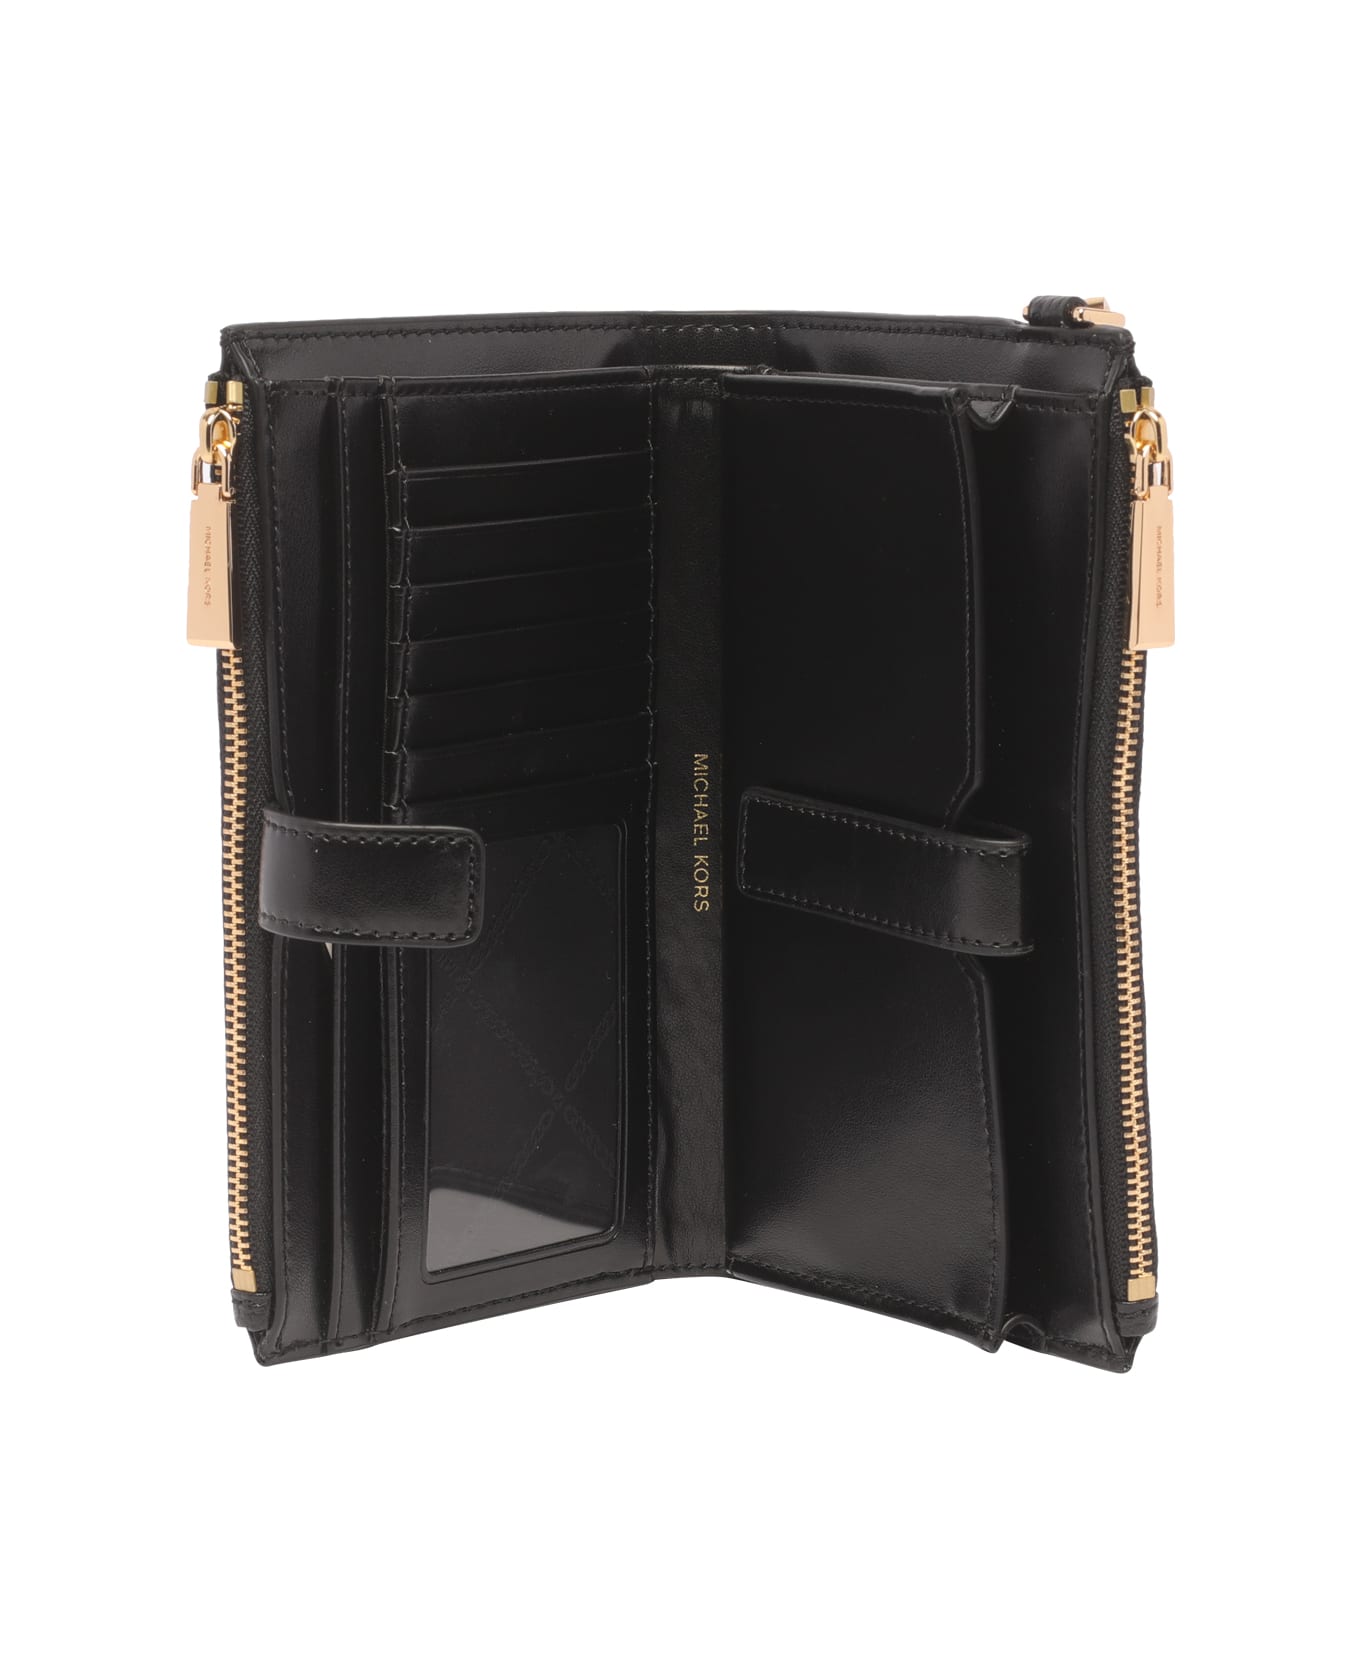 Michael Kors Collection Jet Set Wallet - Black クラッチバッグ